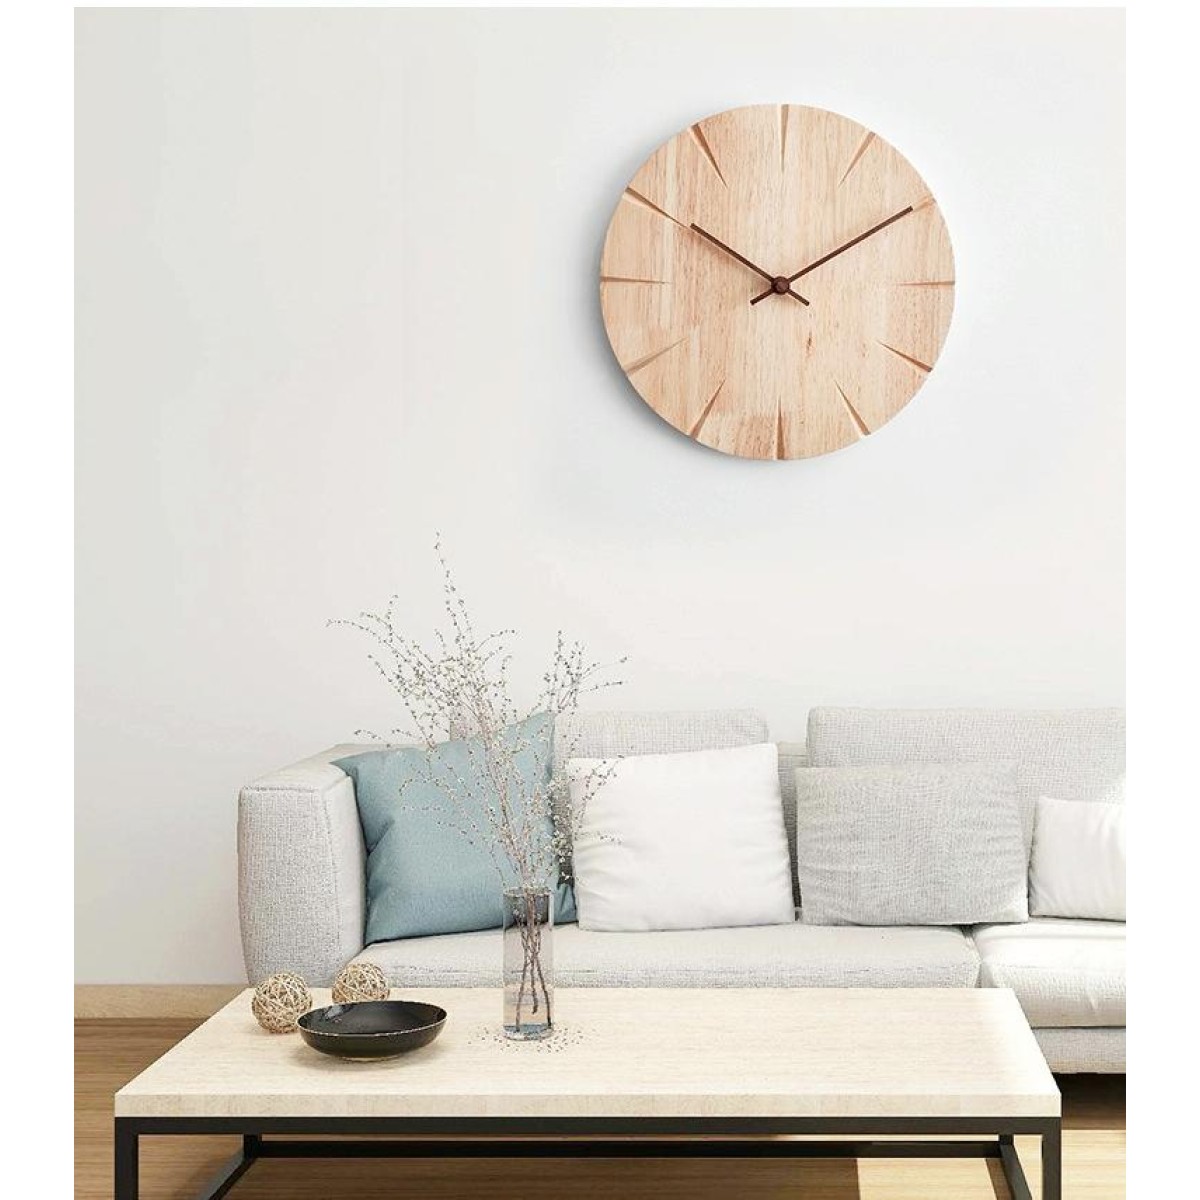 12 inch Solid Wooden Wall Clock Home Living Room Wall Clock Decorative Clock